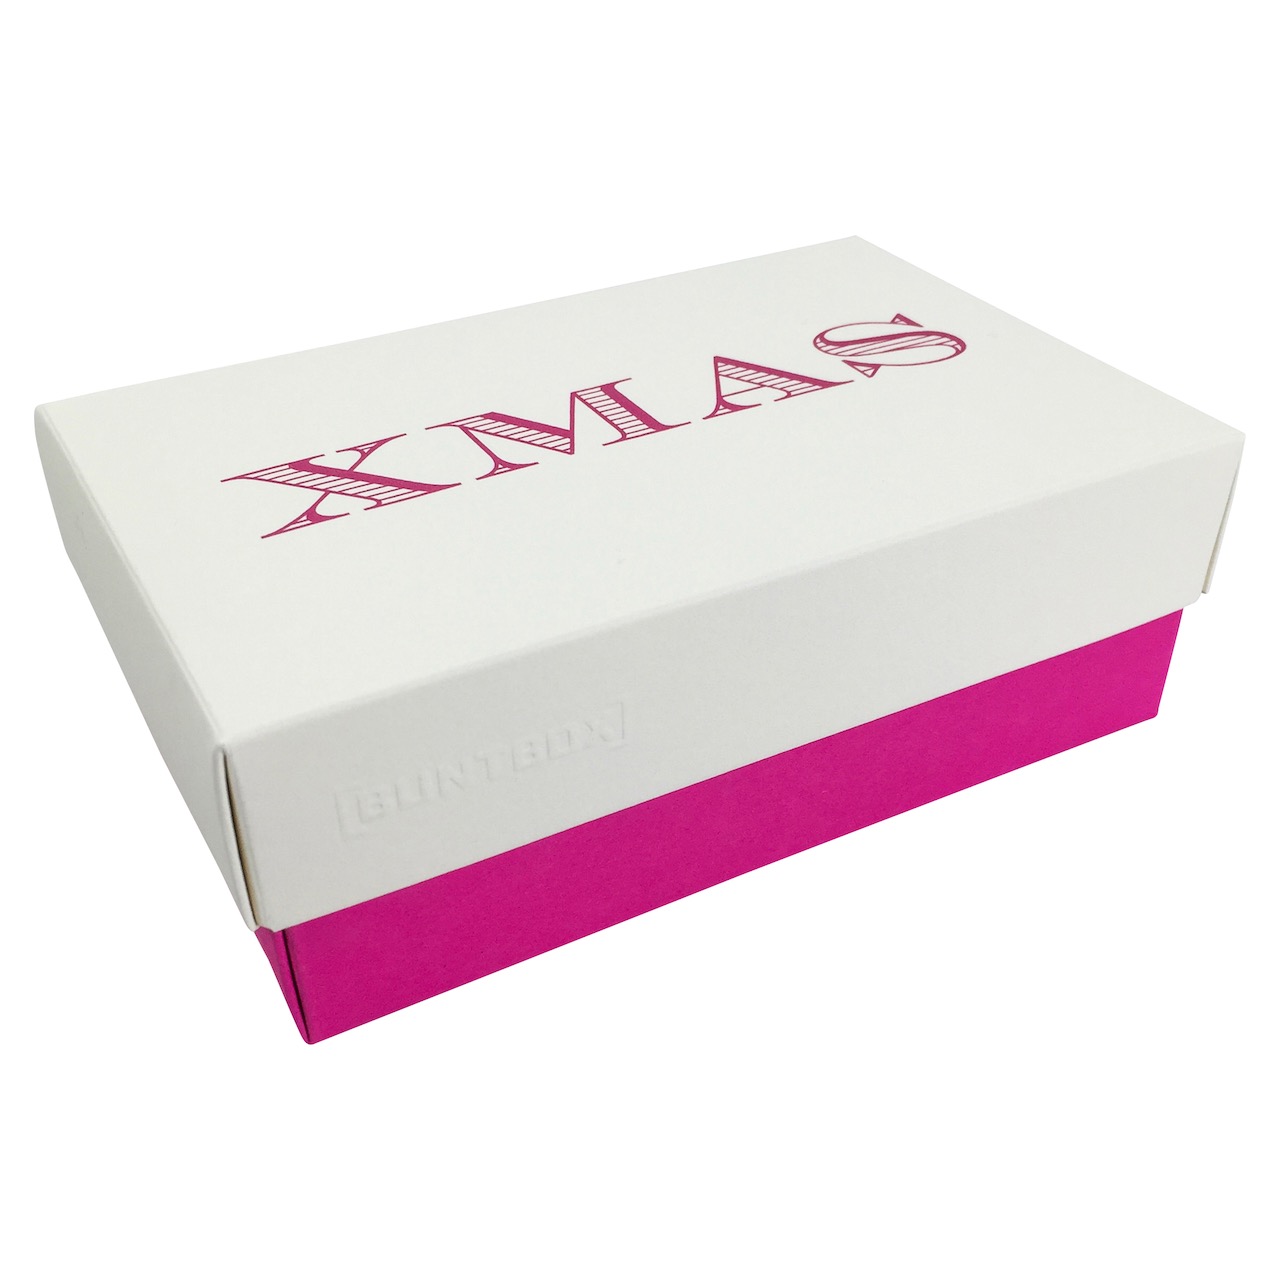 Fine Paper Edition Buntbox Champagne - Bordeaux 'XMAS' - Red